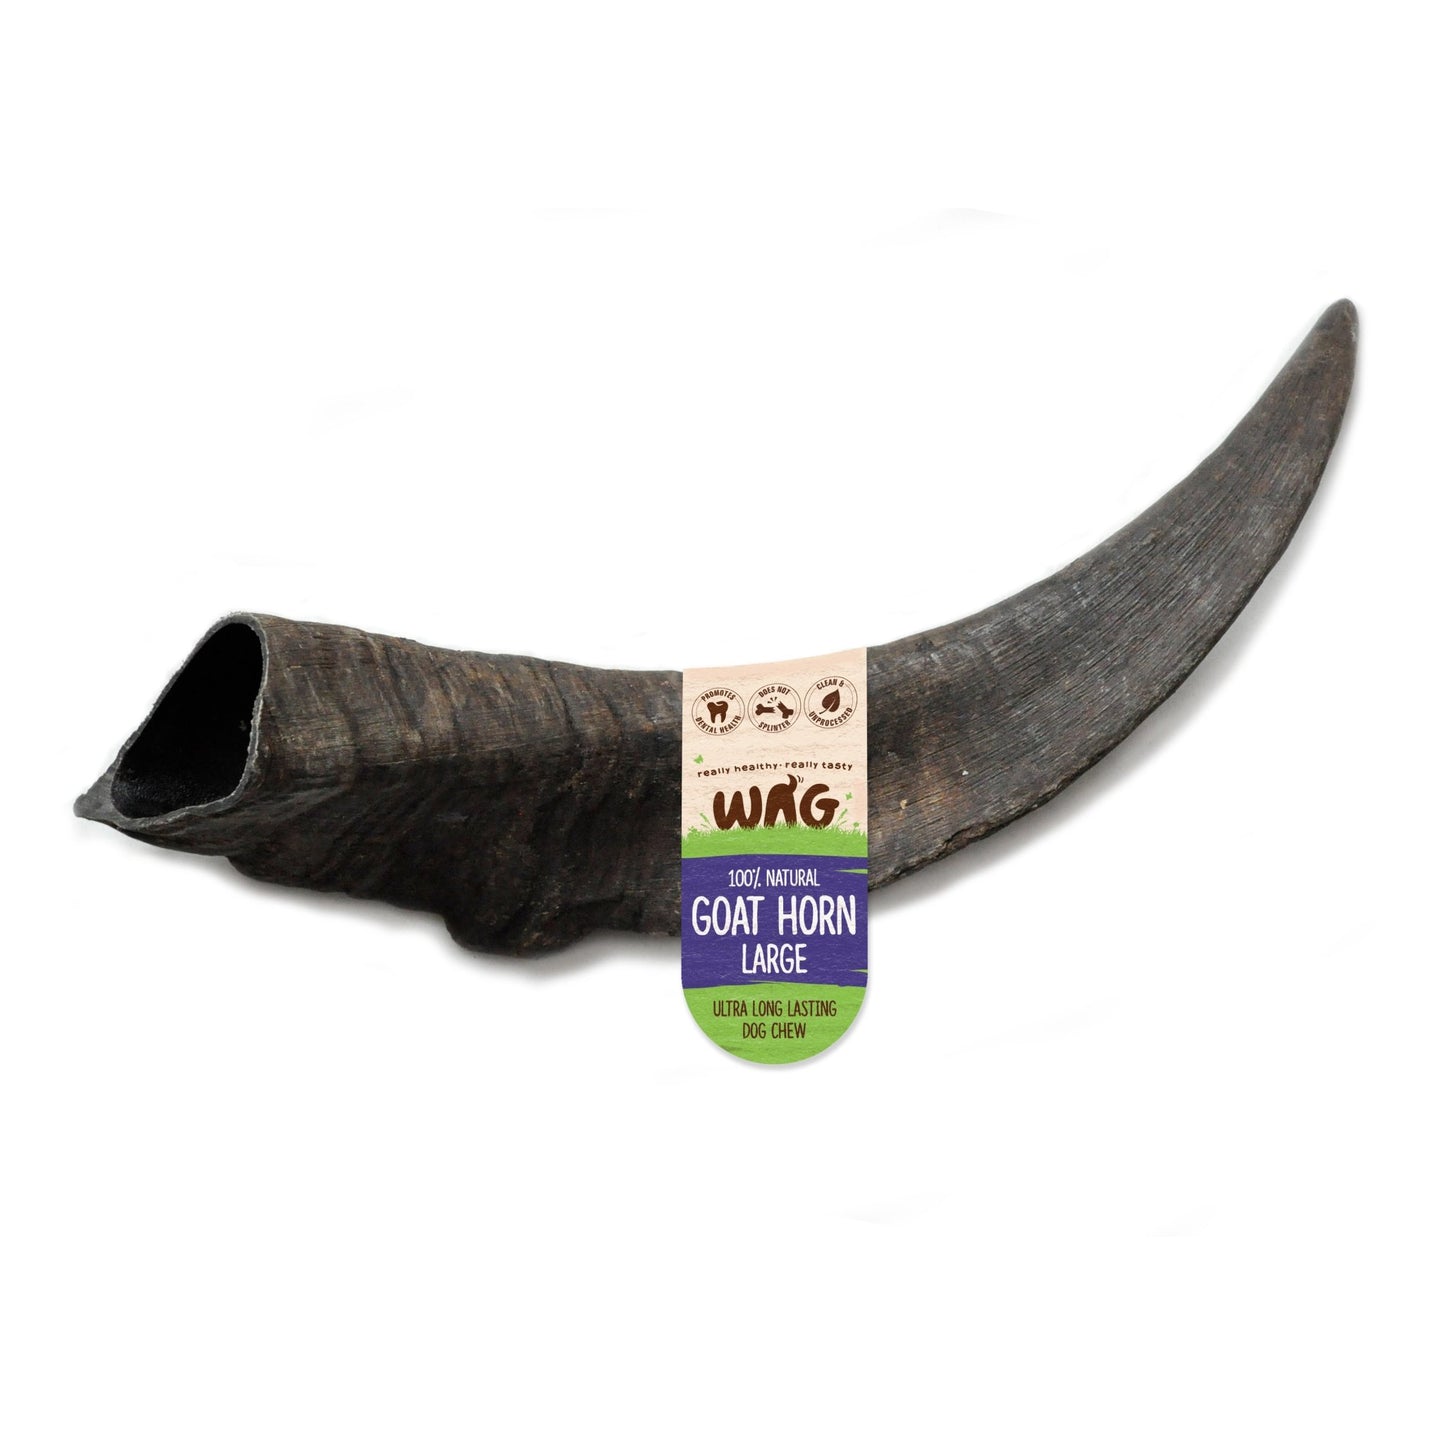 WAG Goat Horn - Woonona Petfood & Produce